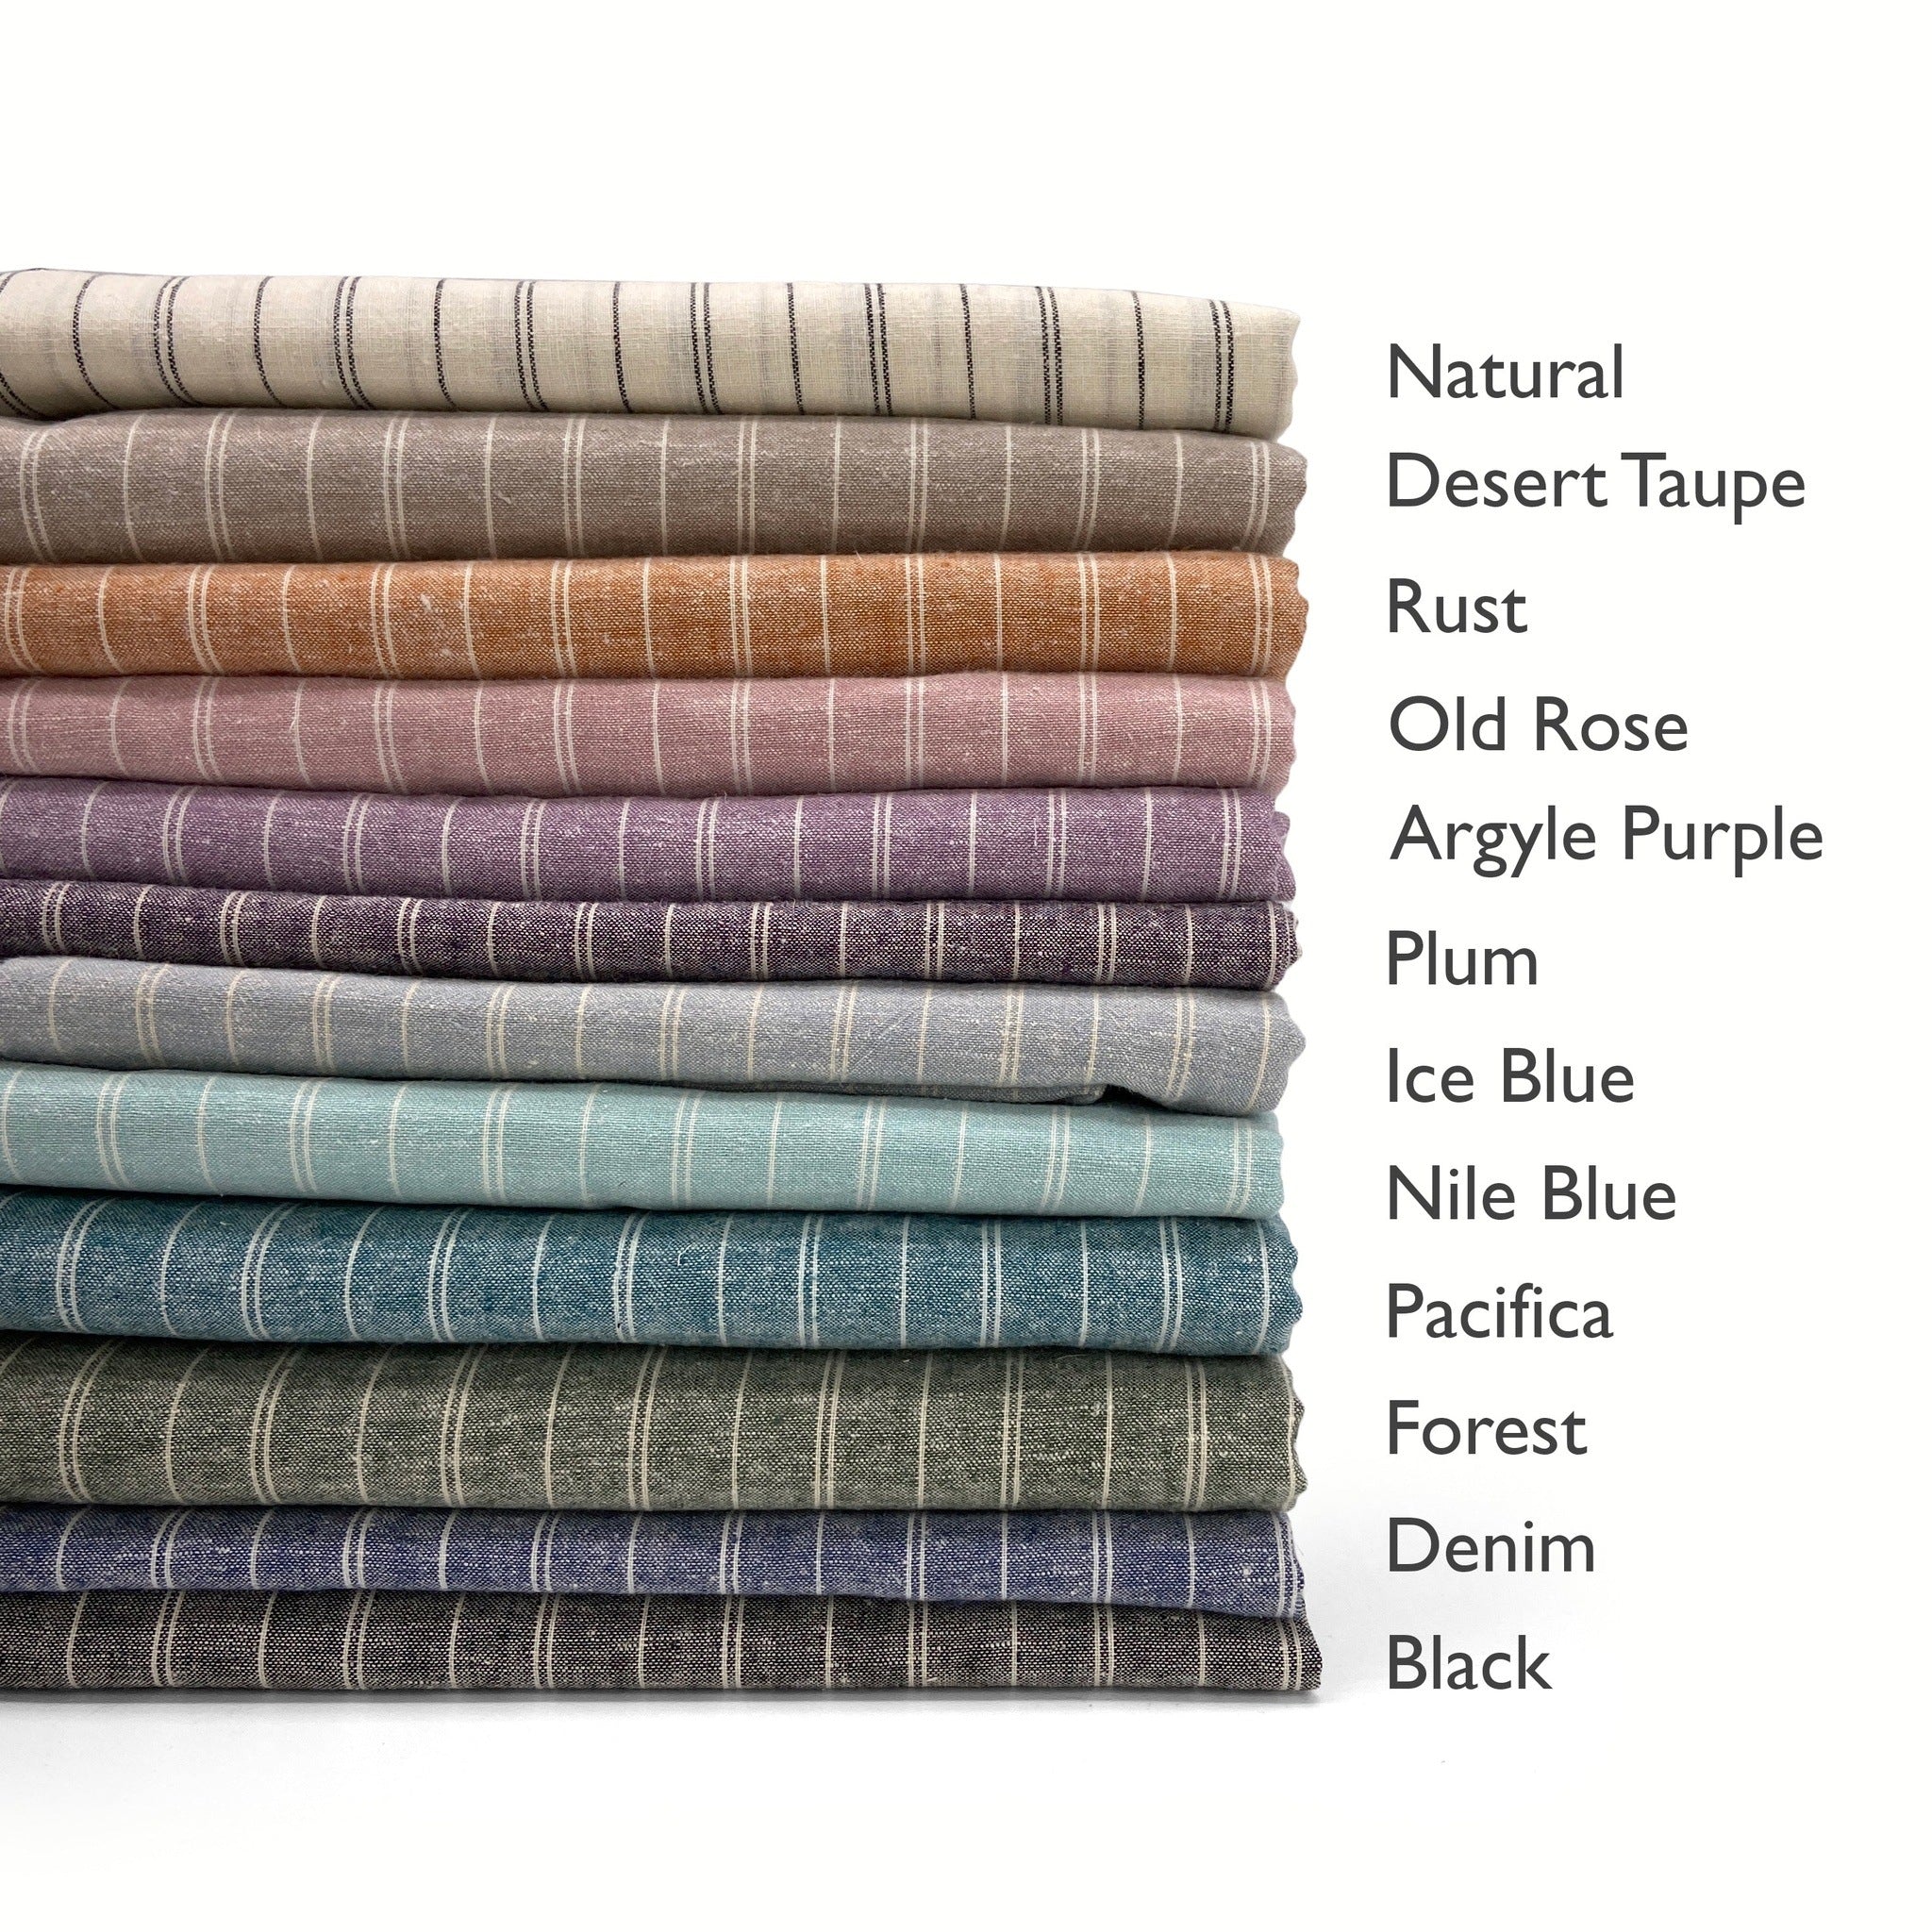 Hemp Organic Cotton Lightweight - Rust Stripe